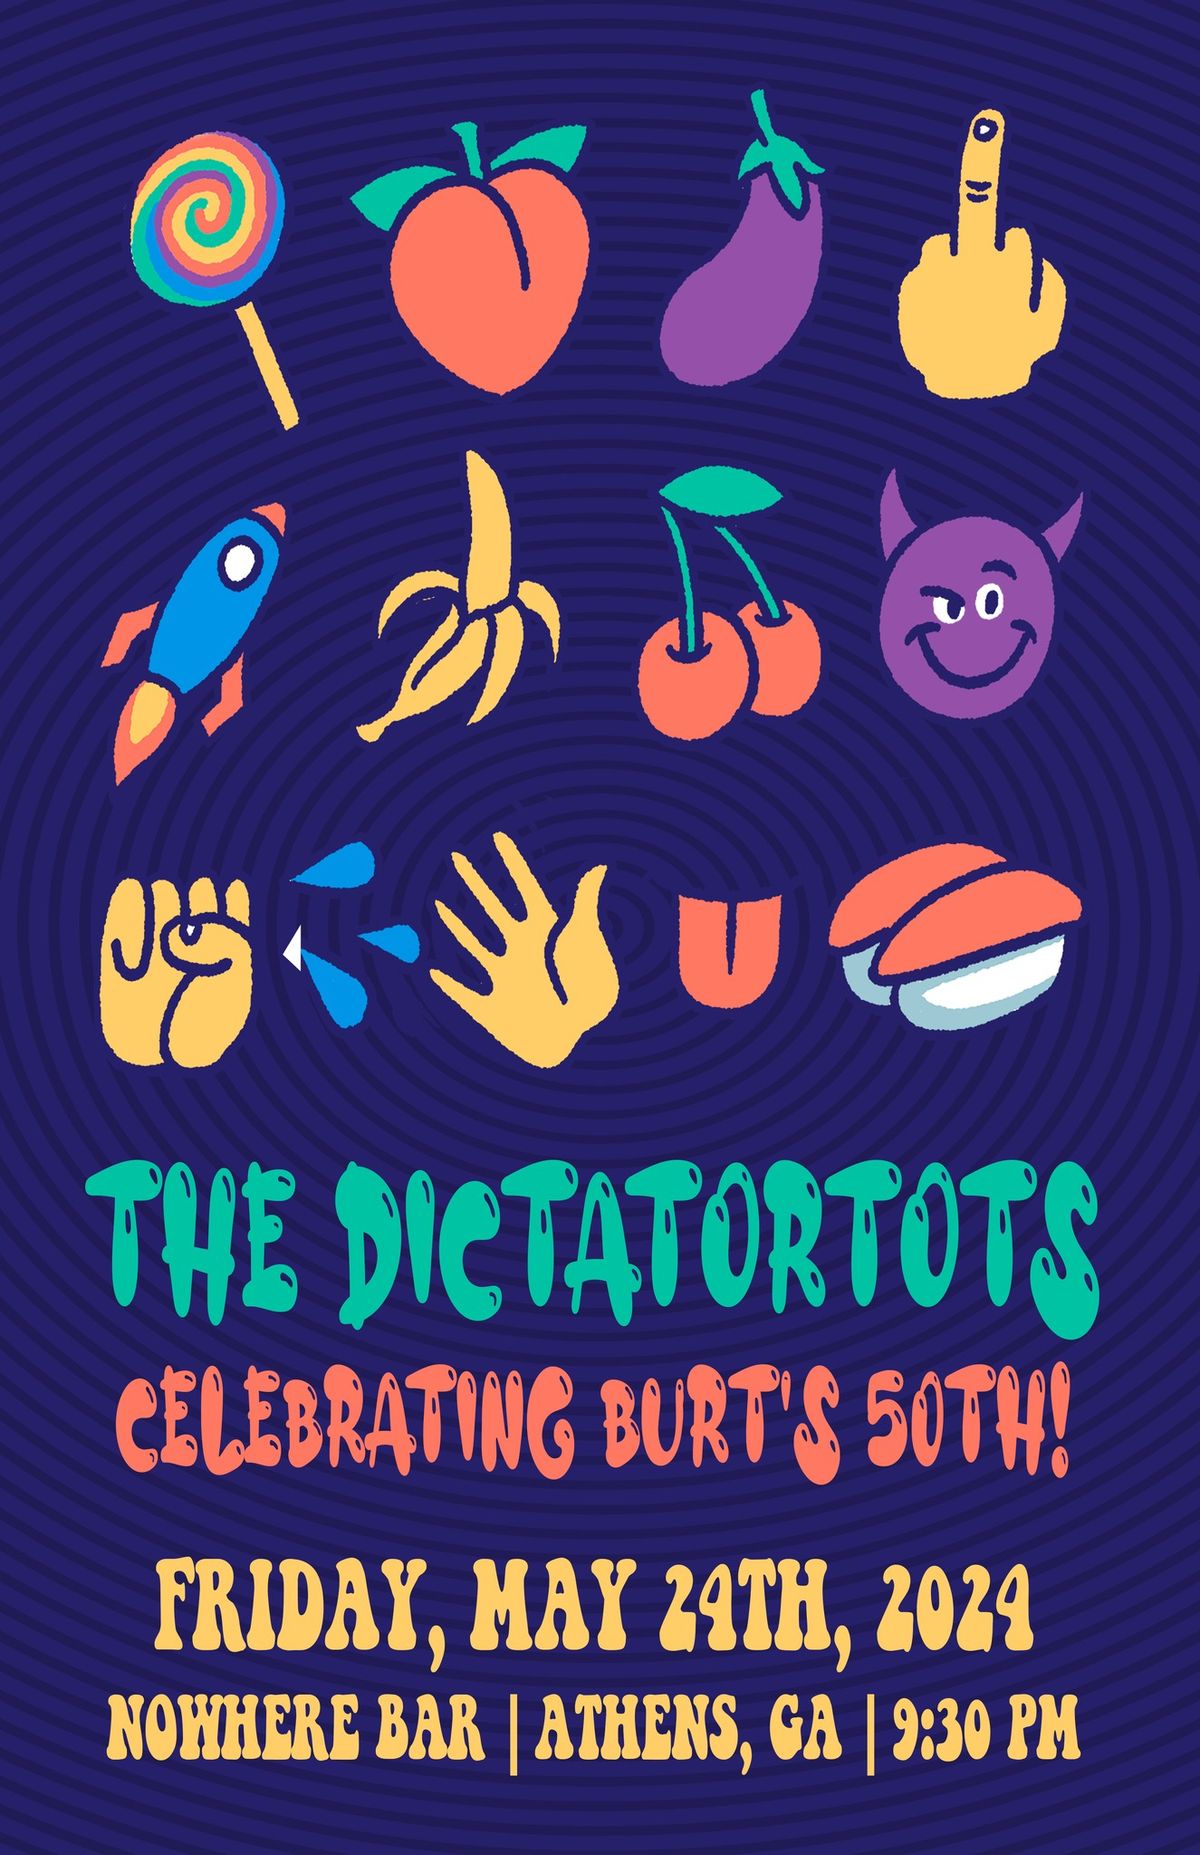 Dictatortots Celebrating Burt's 50th!